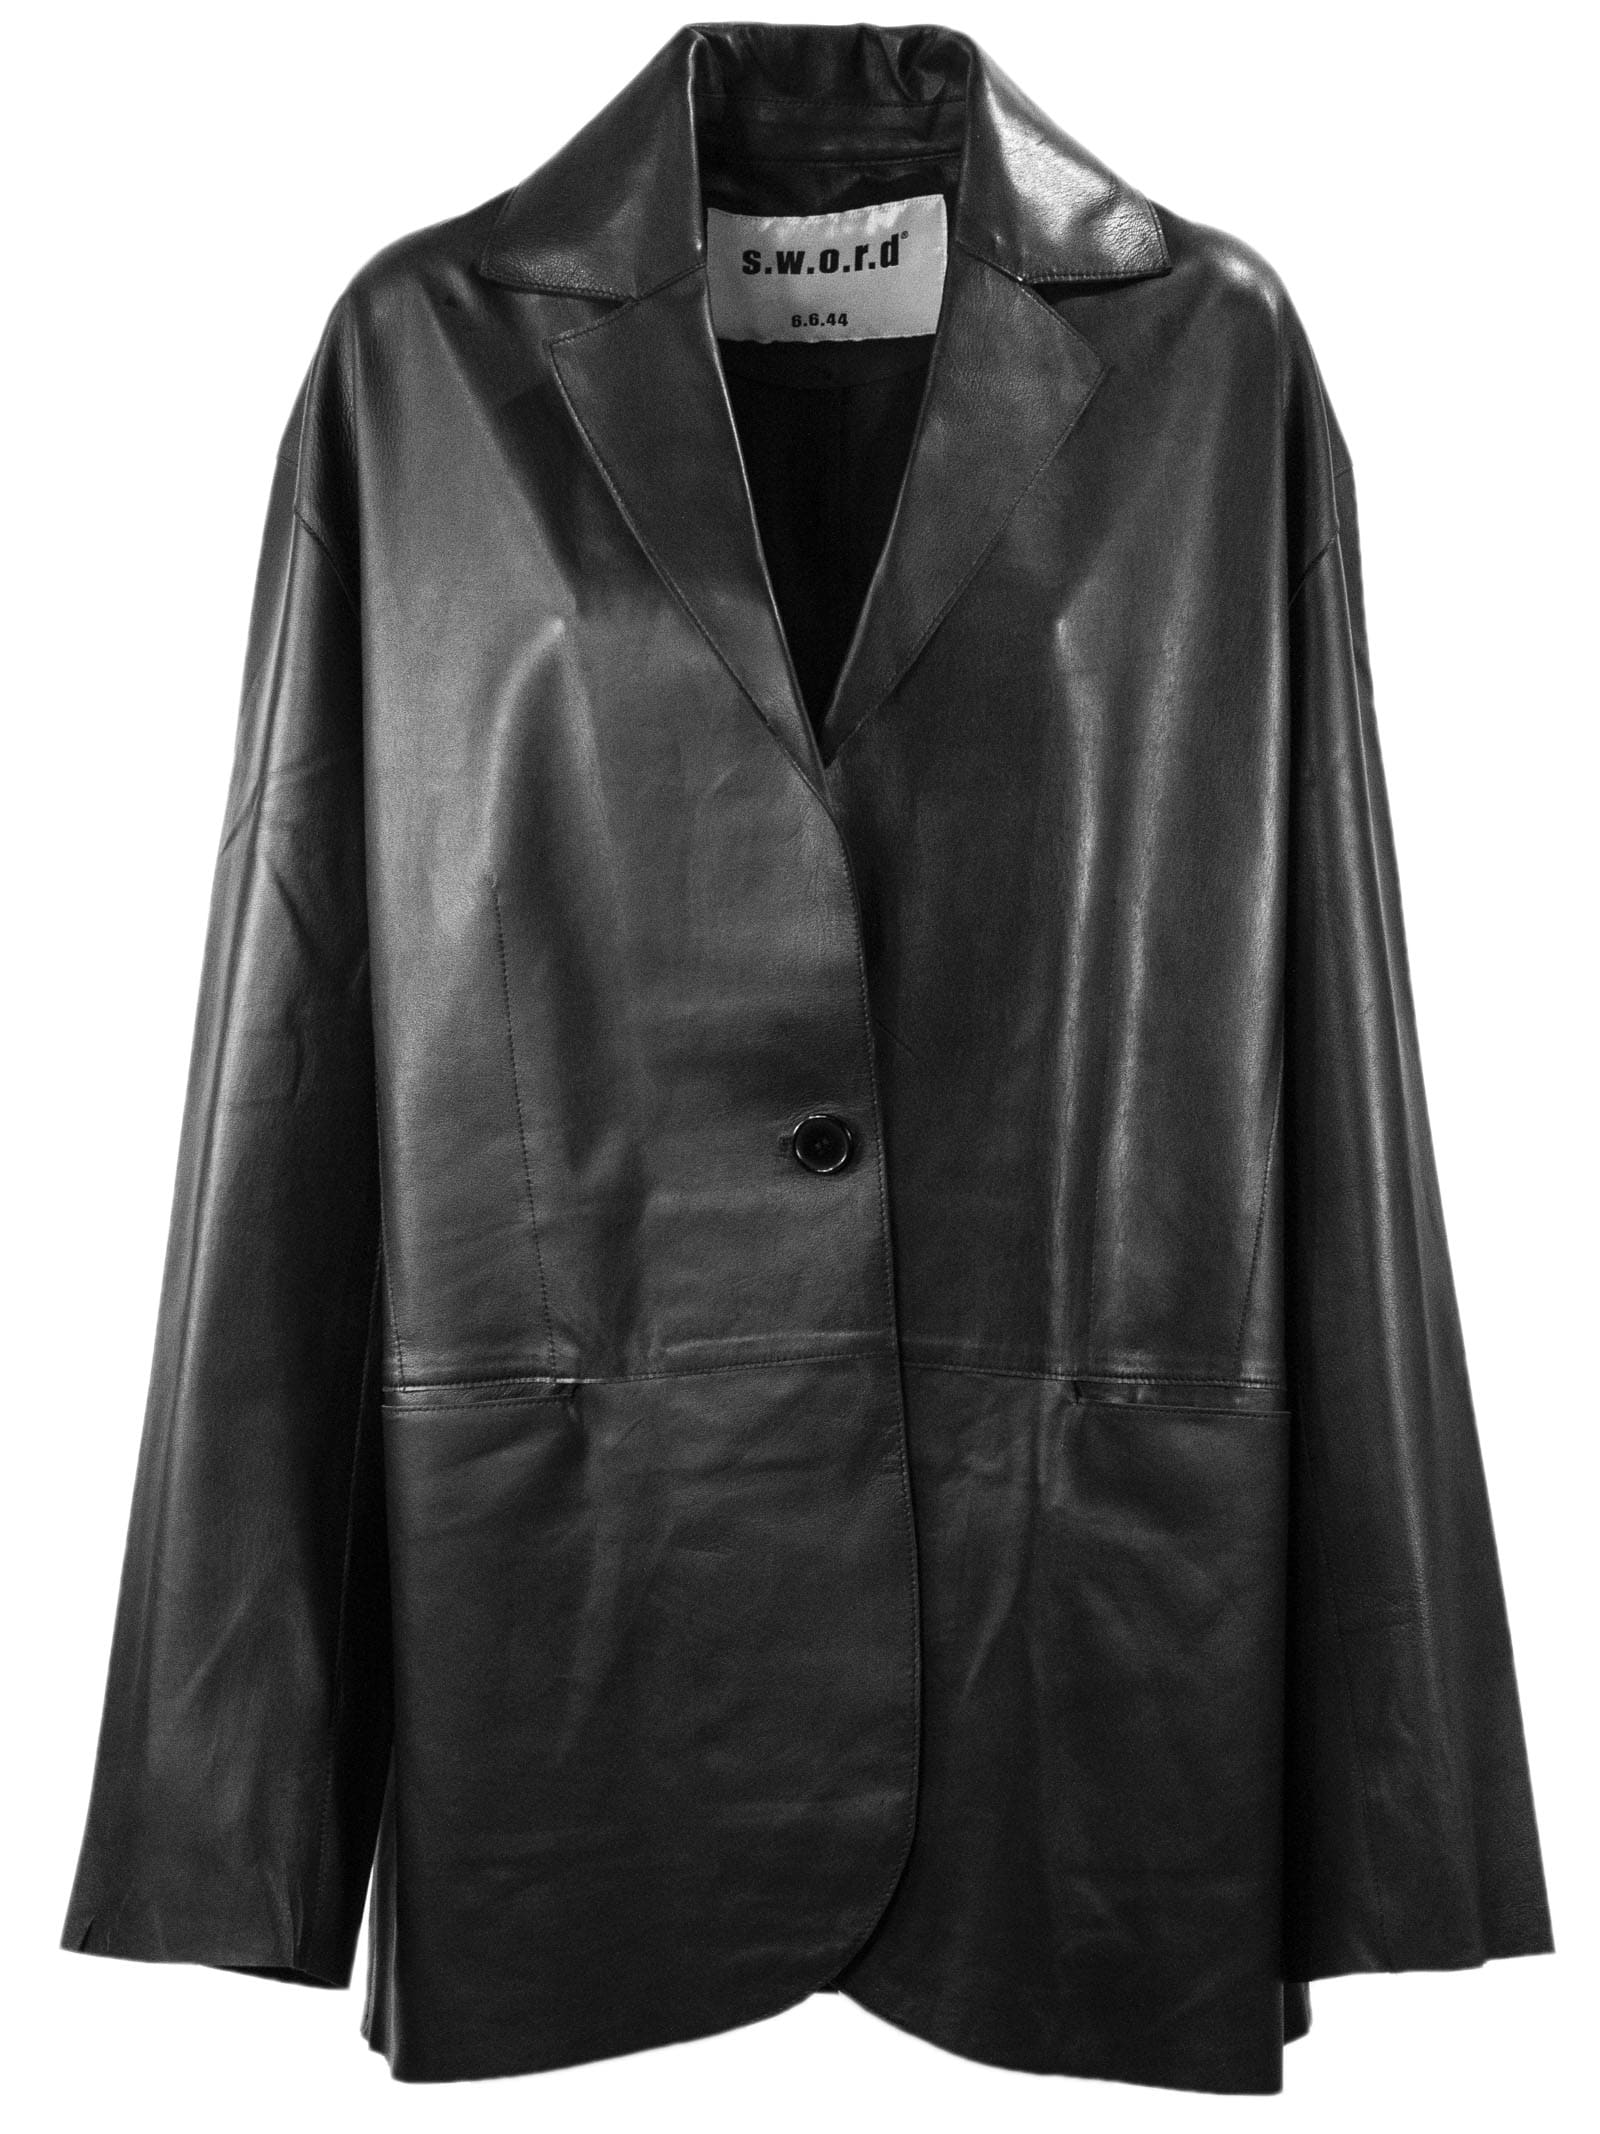 S.W.O.R.D 6.6.44 Leather Jackets | italist, ALWAYS LIKE A SALE